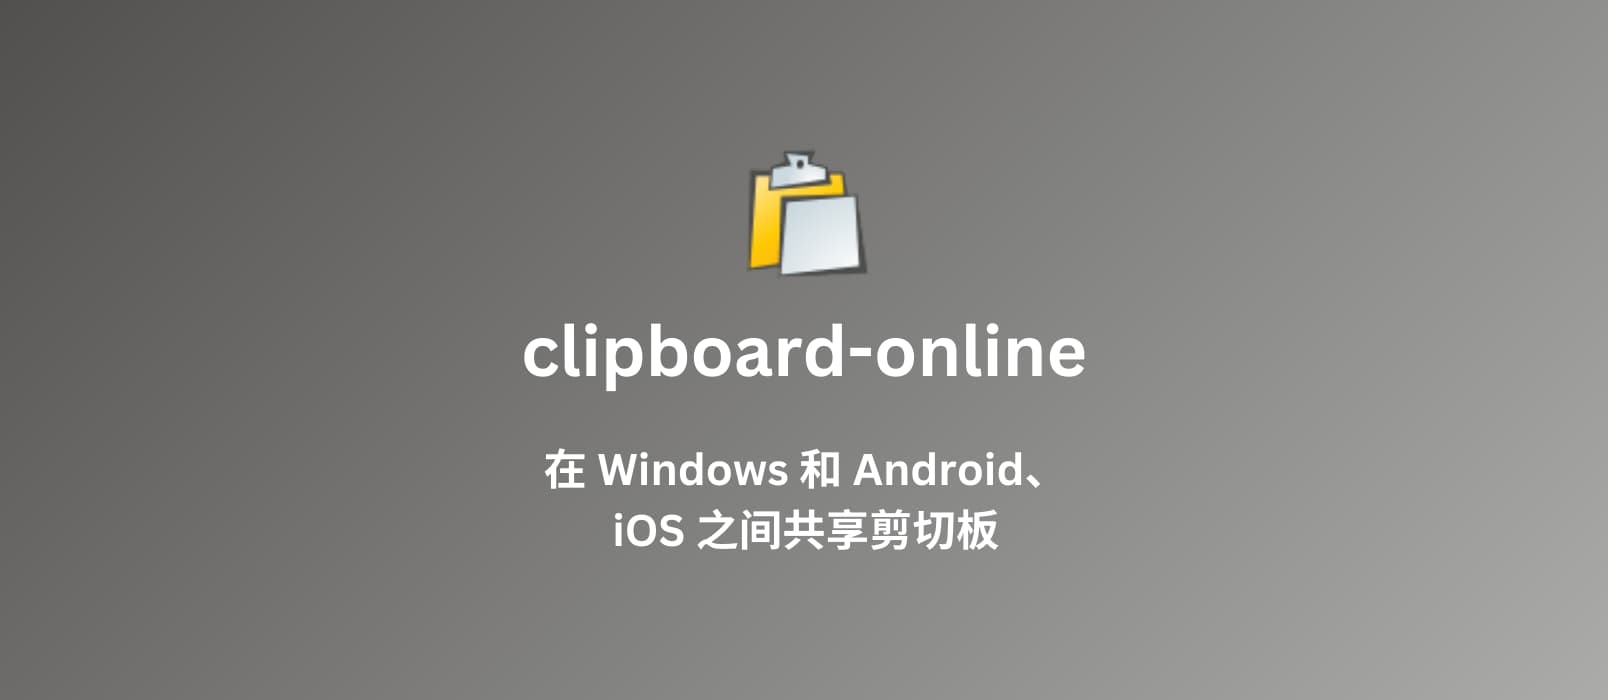 clipboard-online – 在 Windows 和 iOS、Android 之间分享剪切板